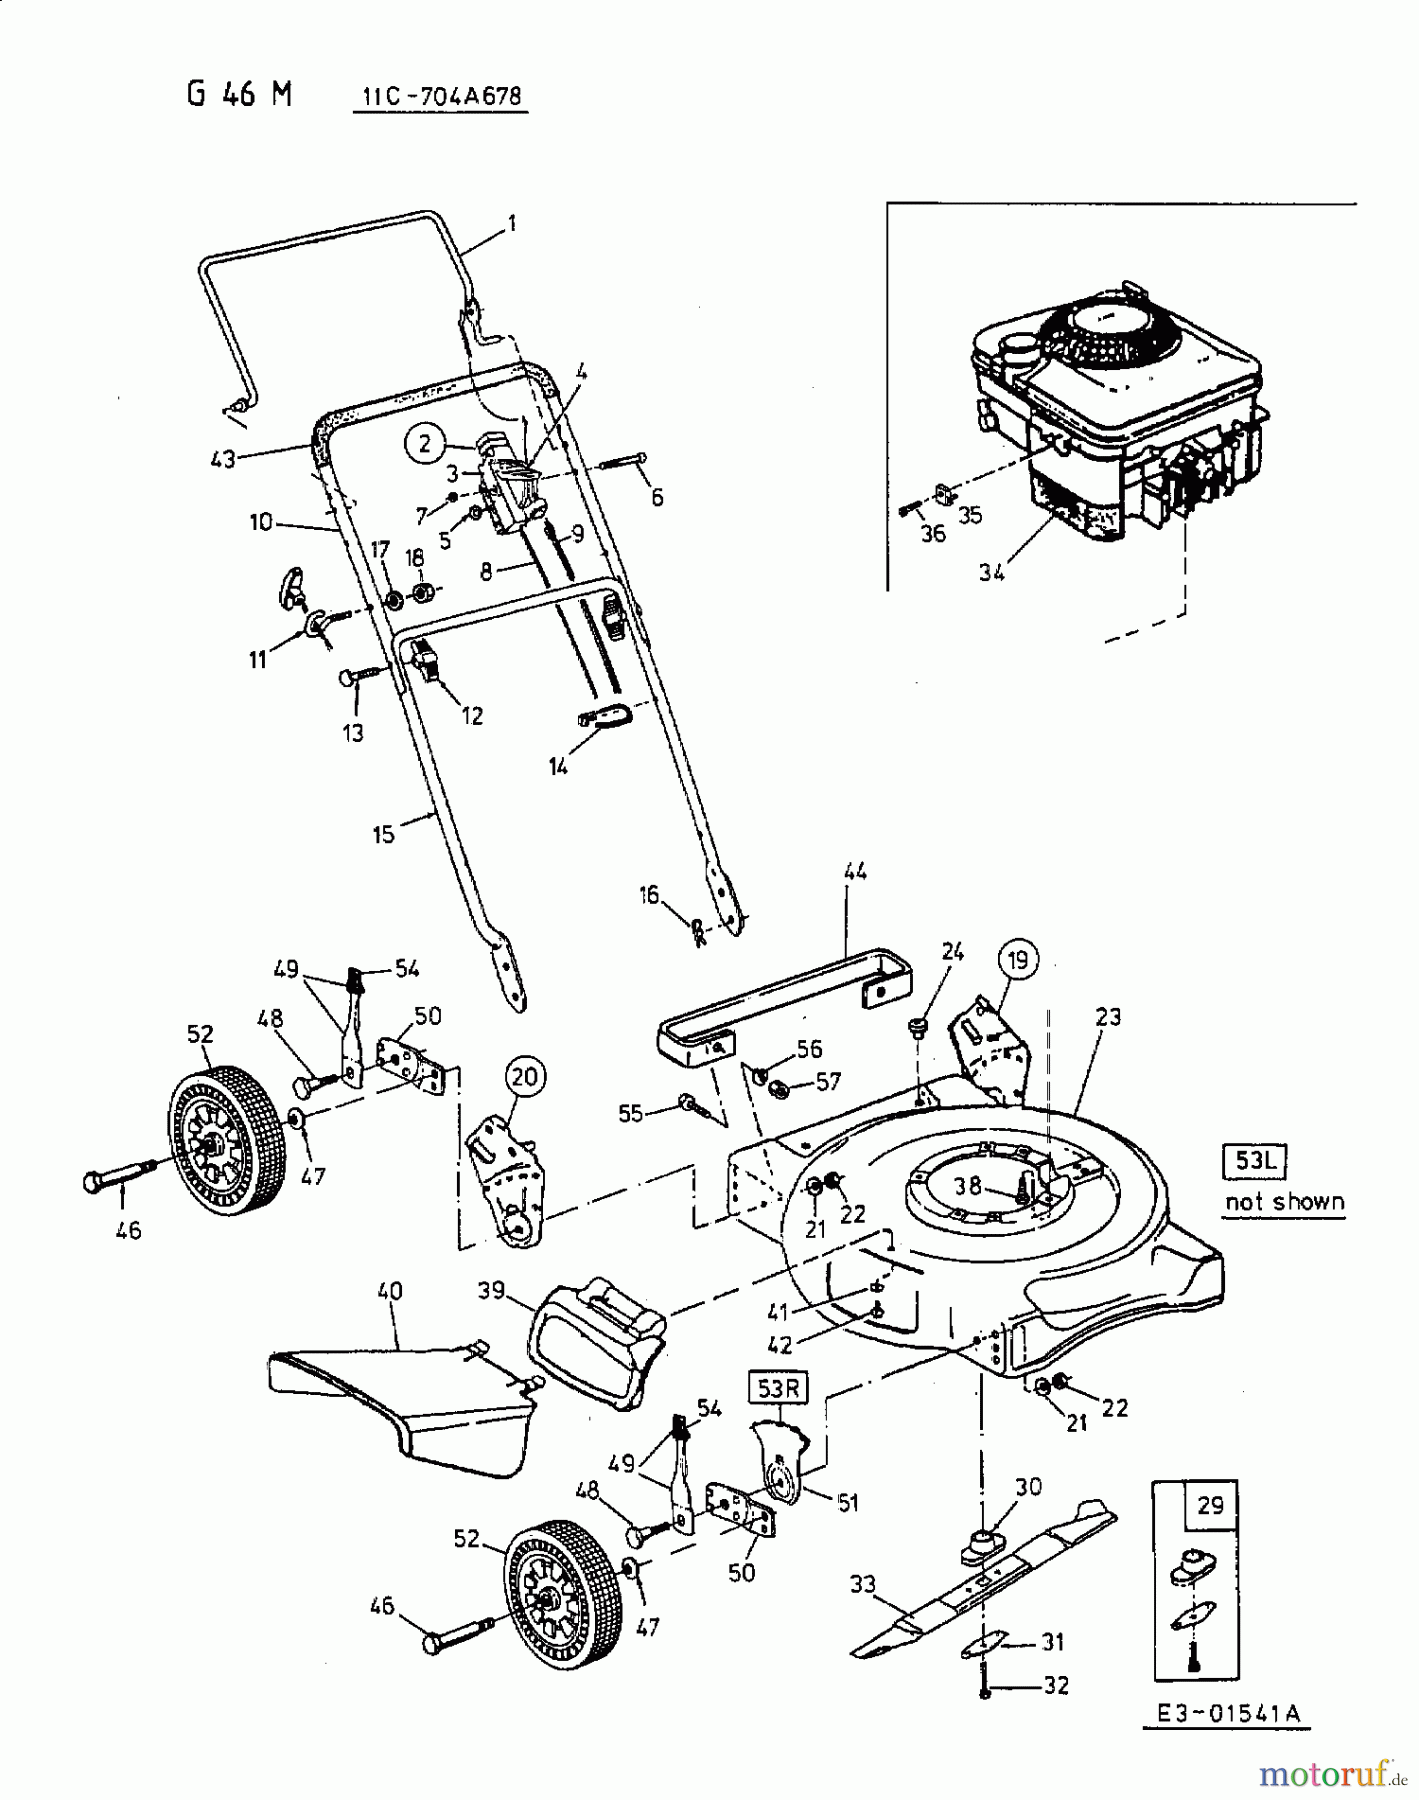  MTD Motormäher G 46 M 11C-704A678  (2001) Grundgerät